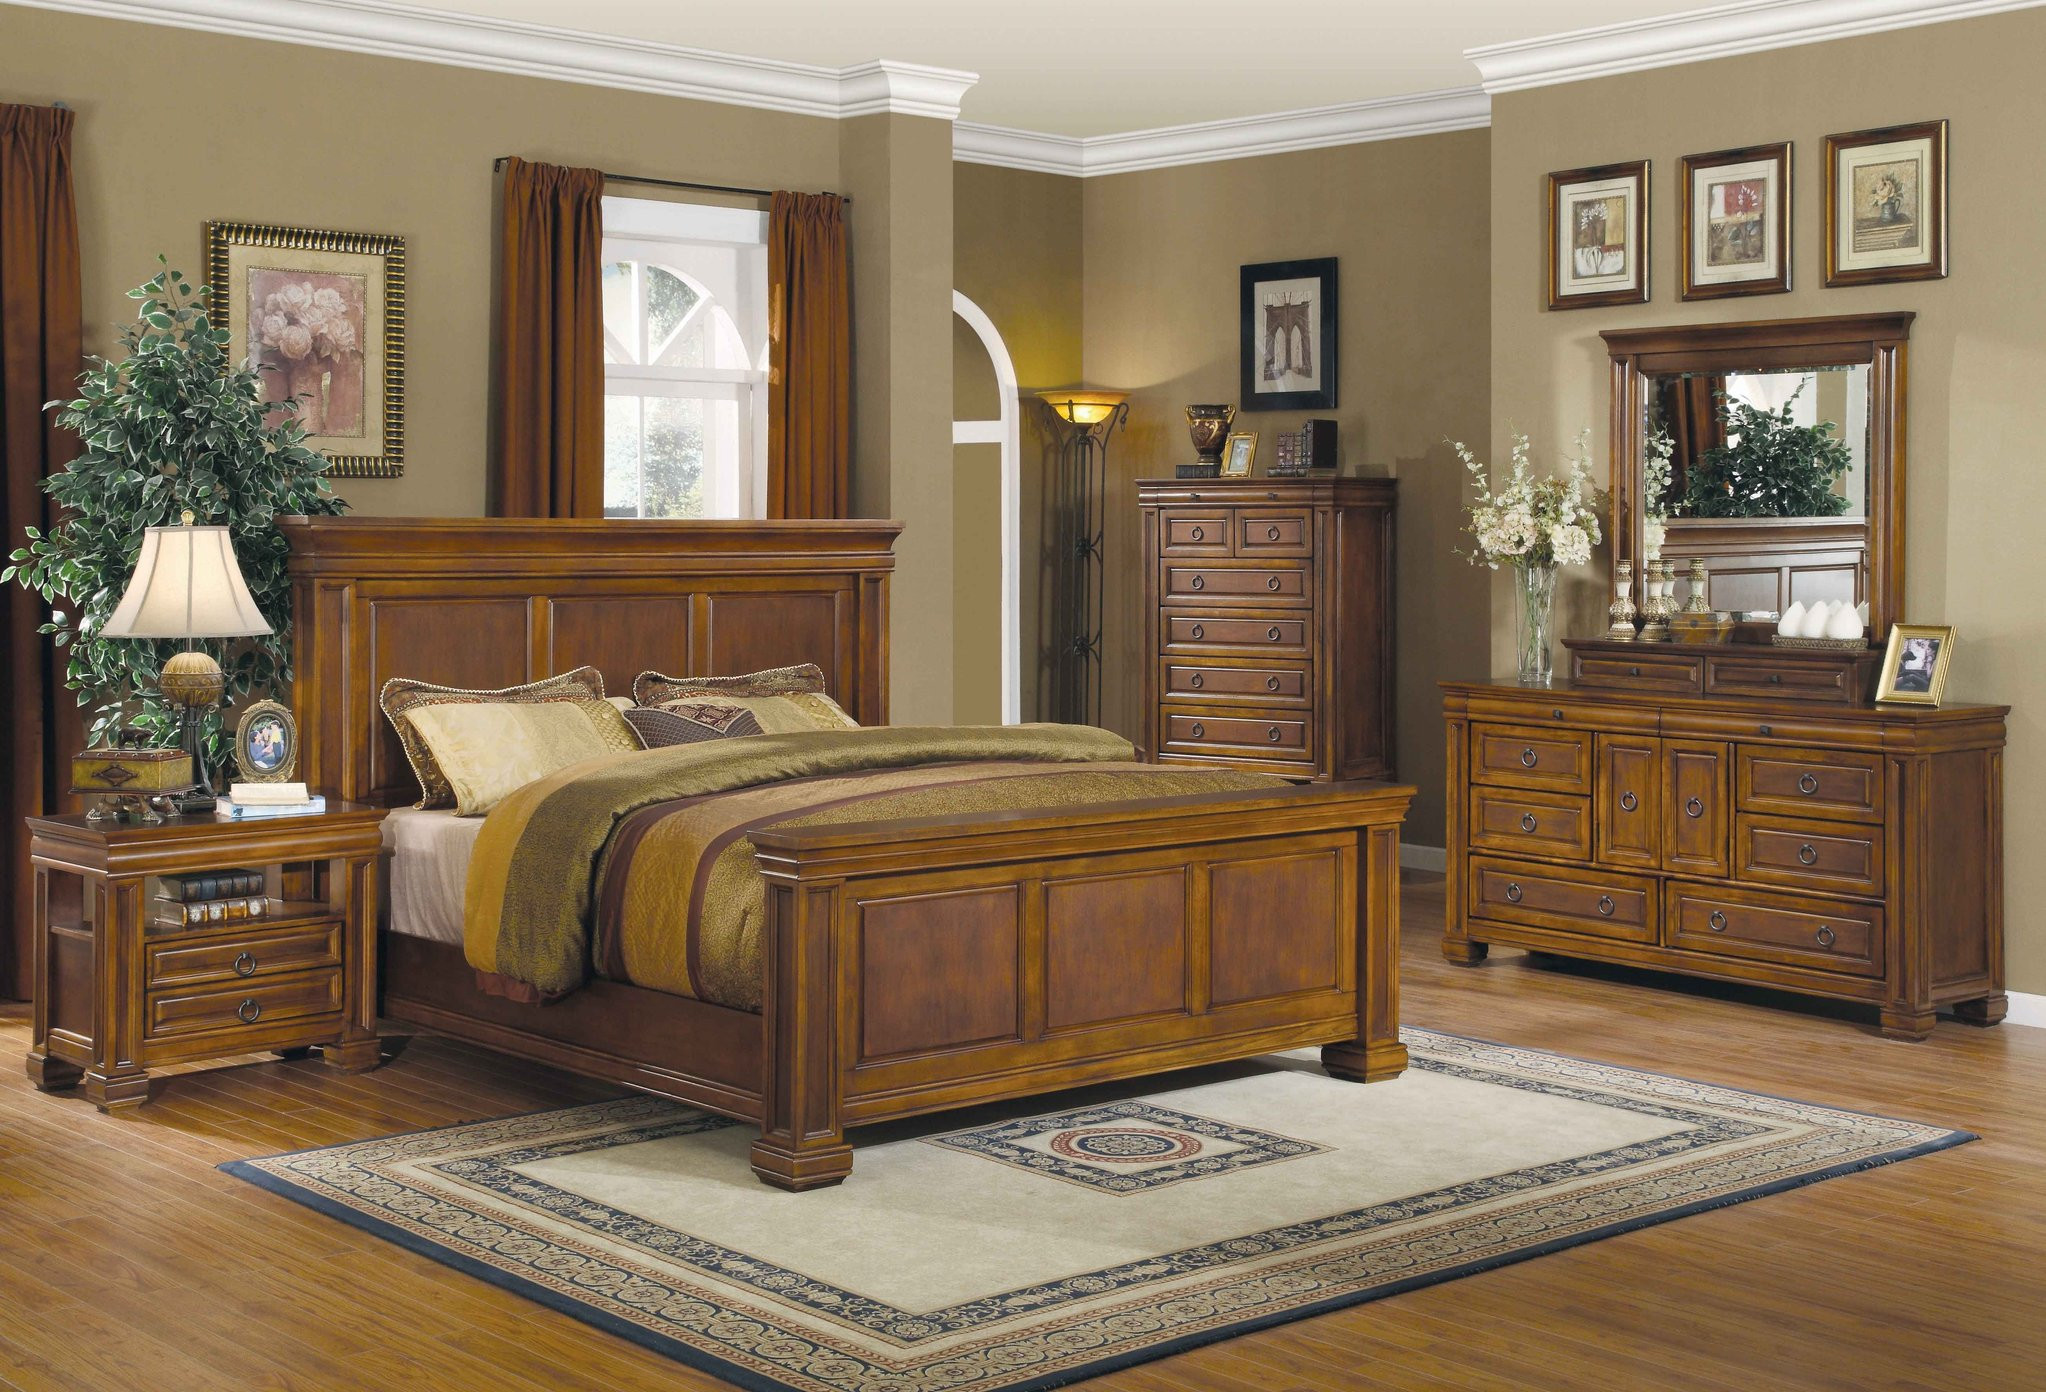 Rustic King Bedroom Sets
 Antique Rustic Bedroom Furniture Wood King and Queen